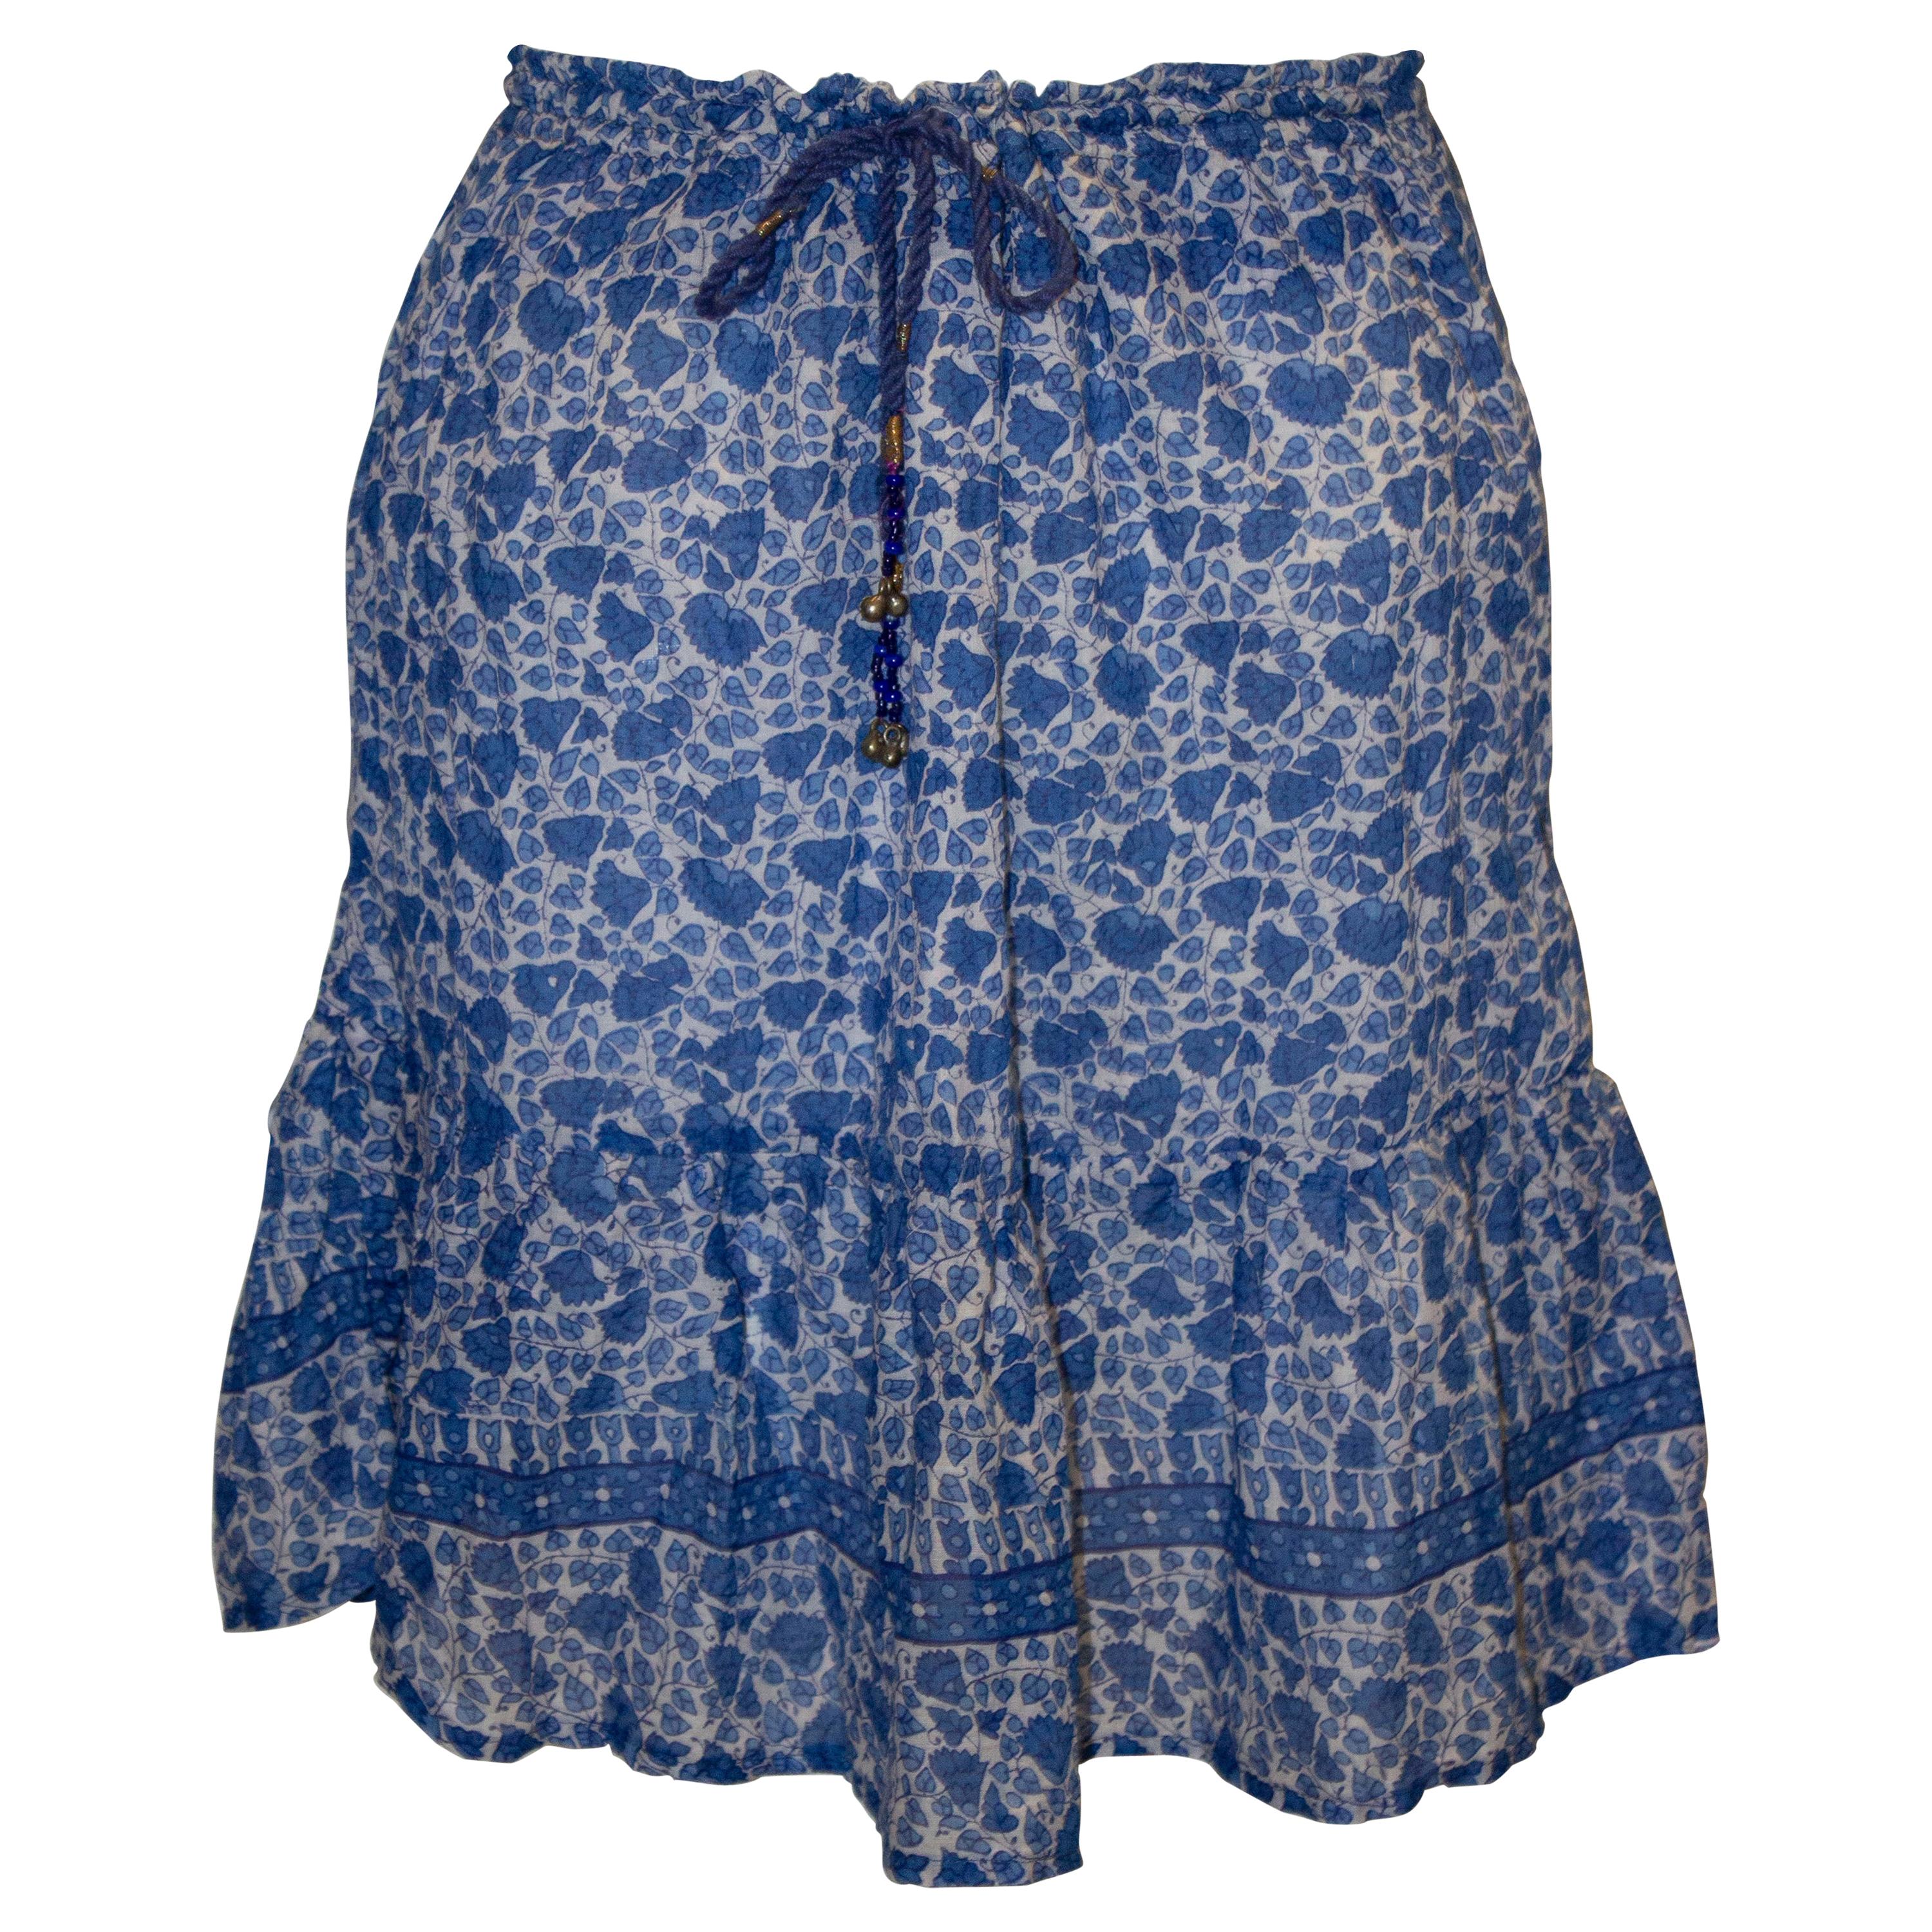 Vintage Indian Cotton Summer Skirt